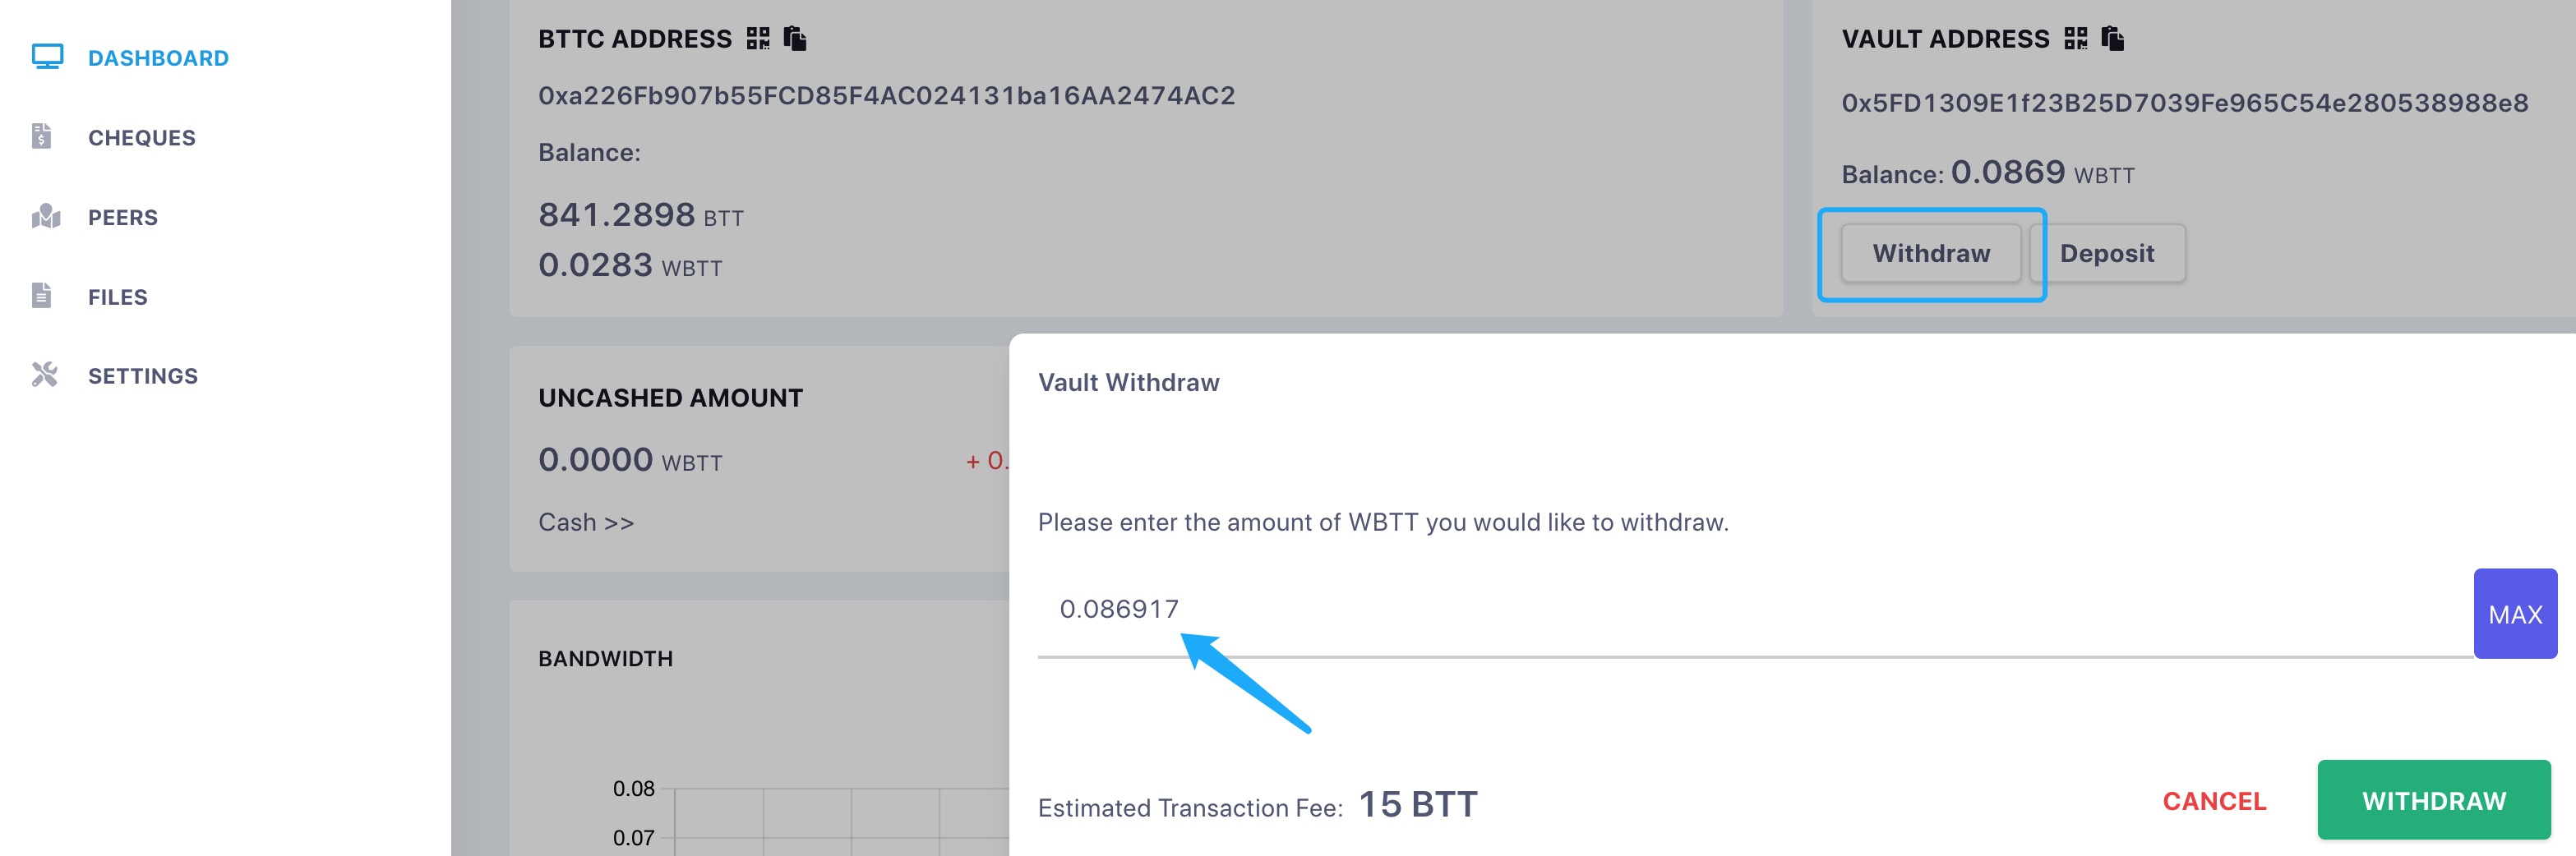 Withdraw WBTT from VAULT ADDRESS to BTTC ADDRESS